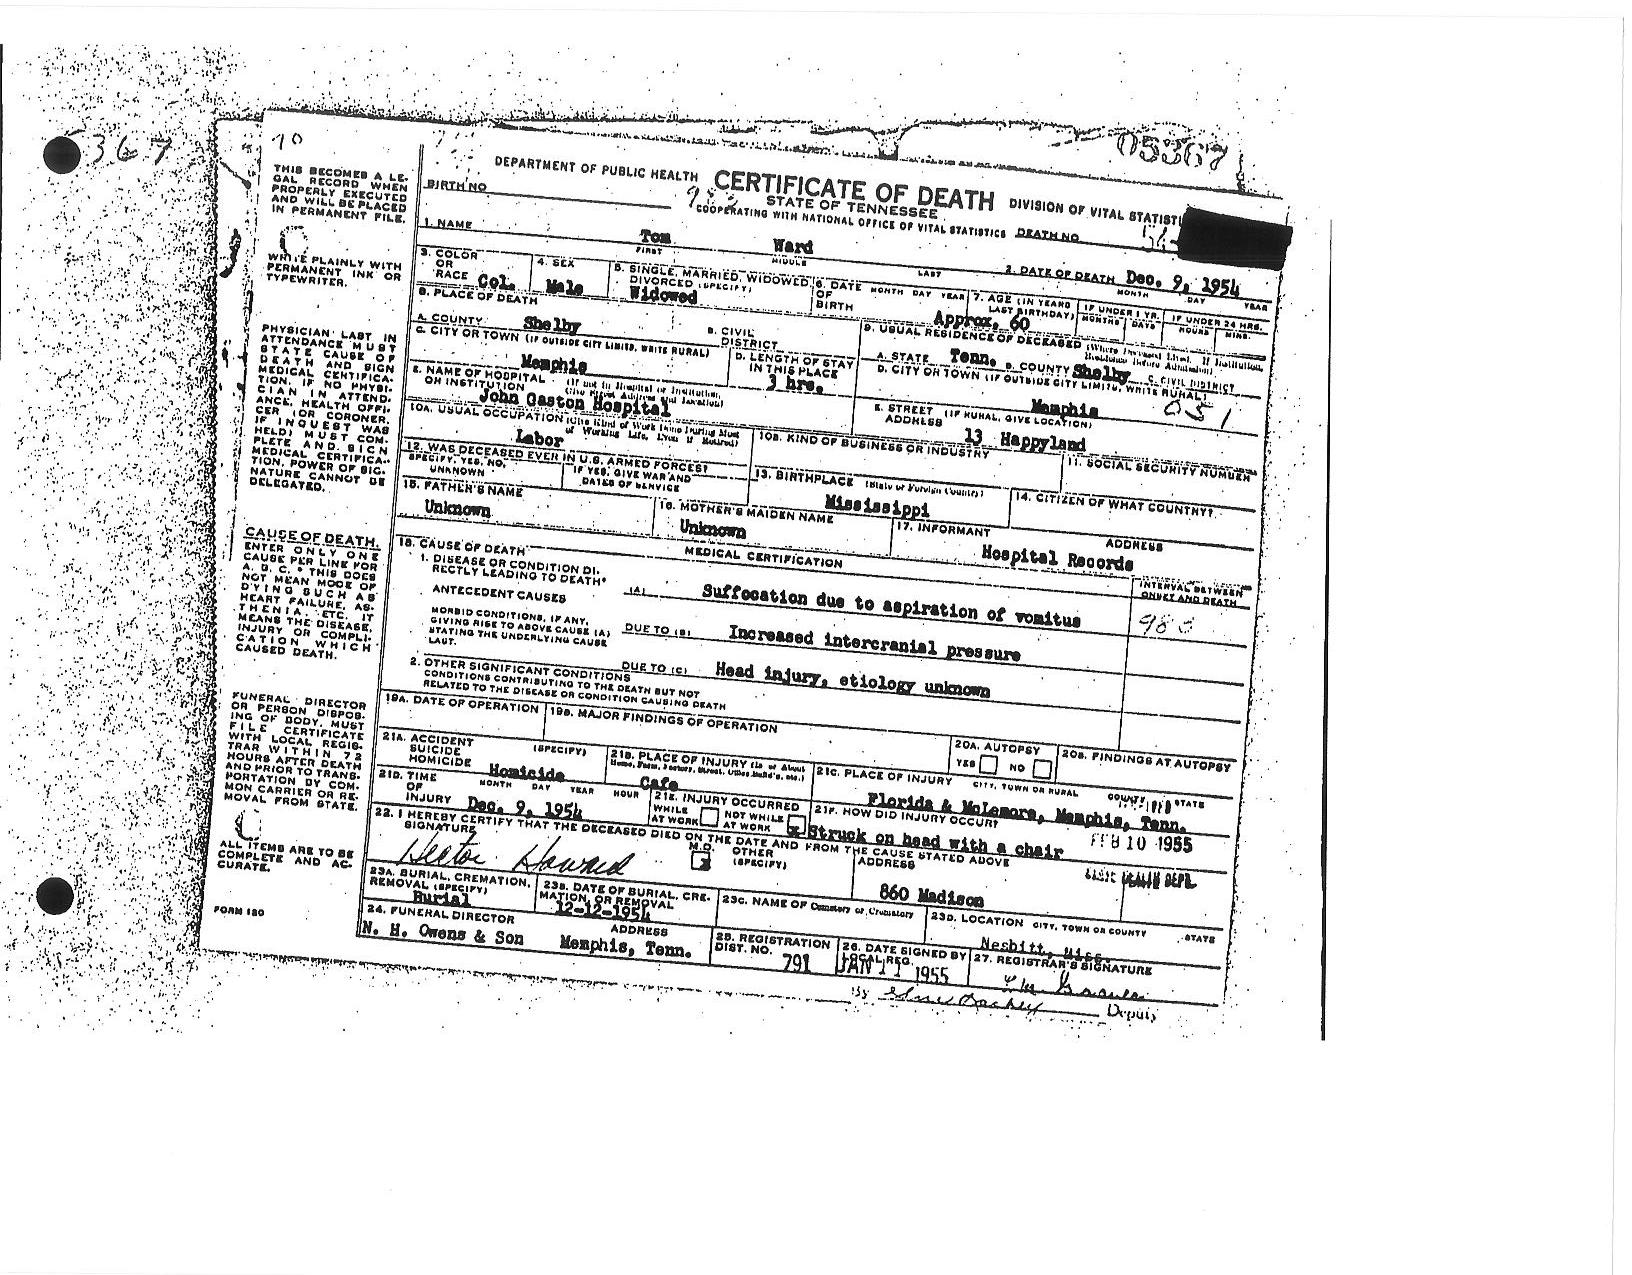 Thomas (Tom) Ward's Death certificate.